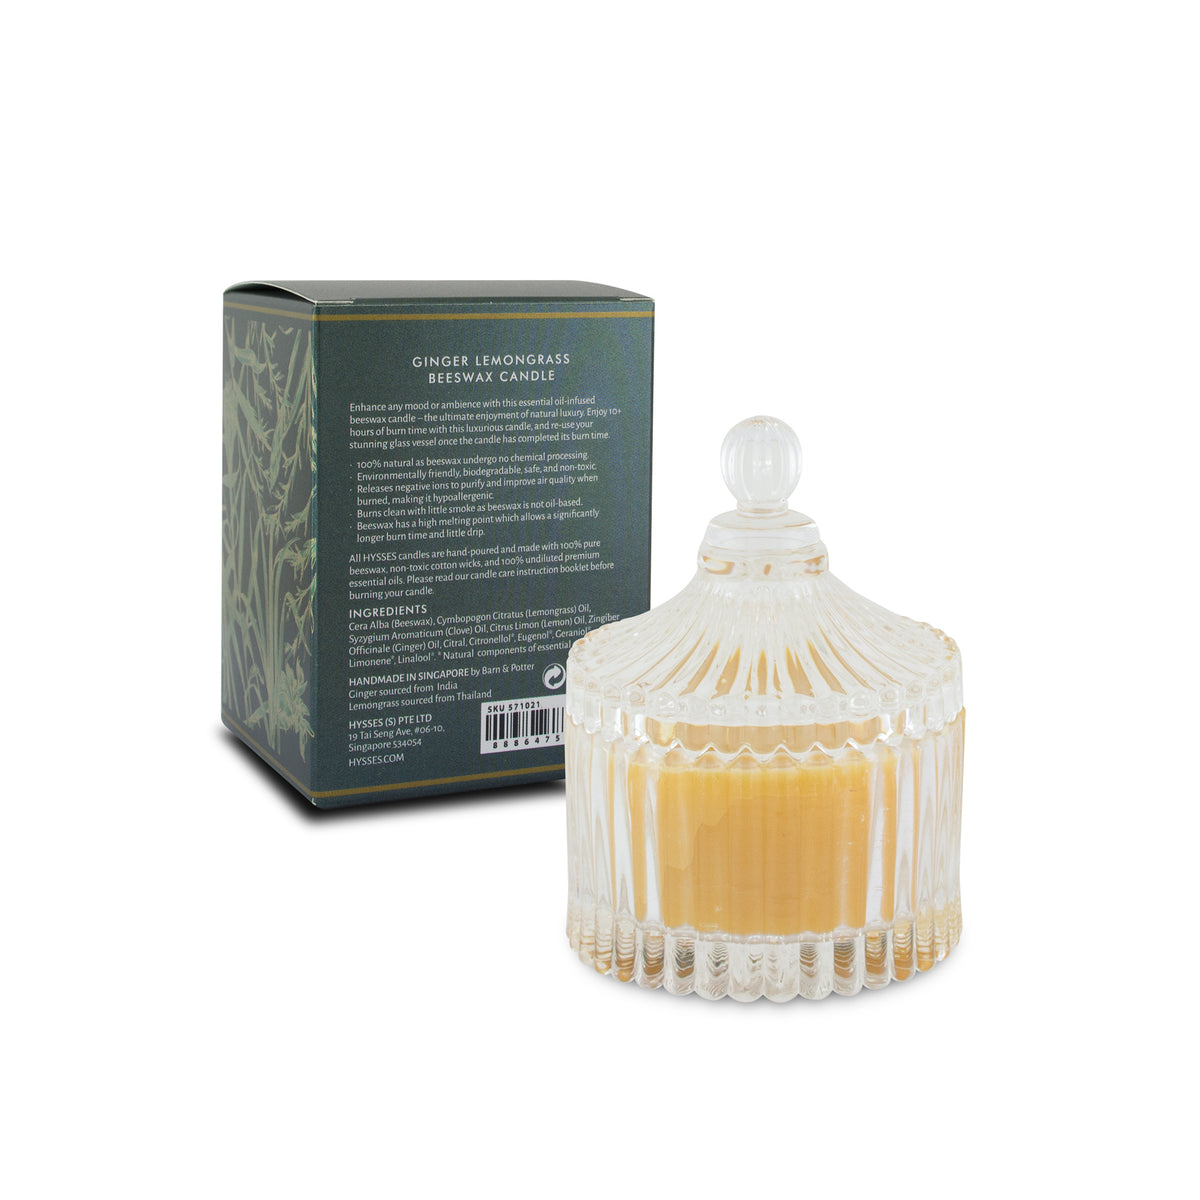 Beeswax Candle Ginger Lemongrass